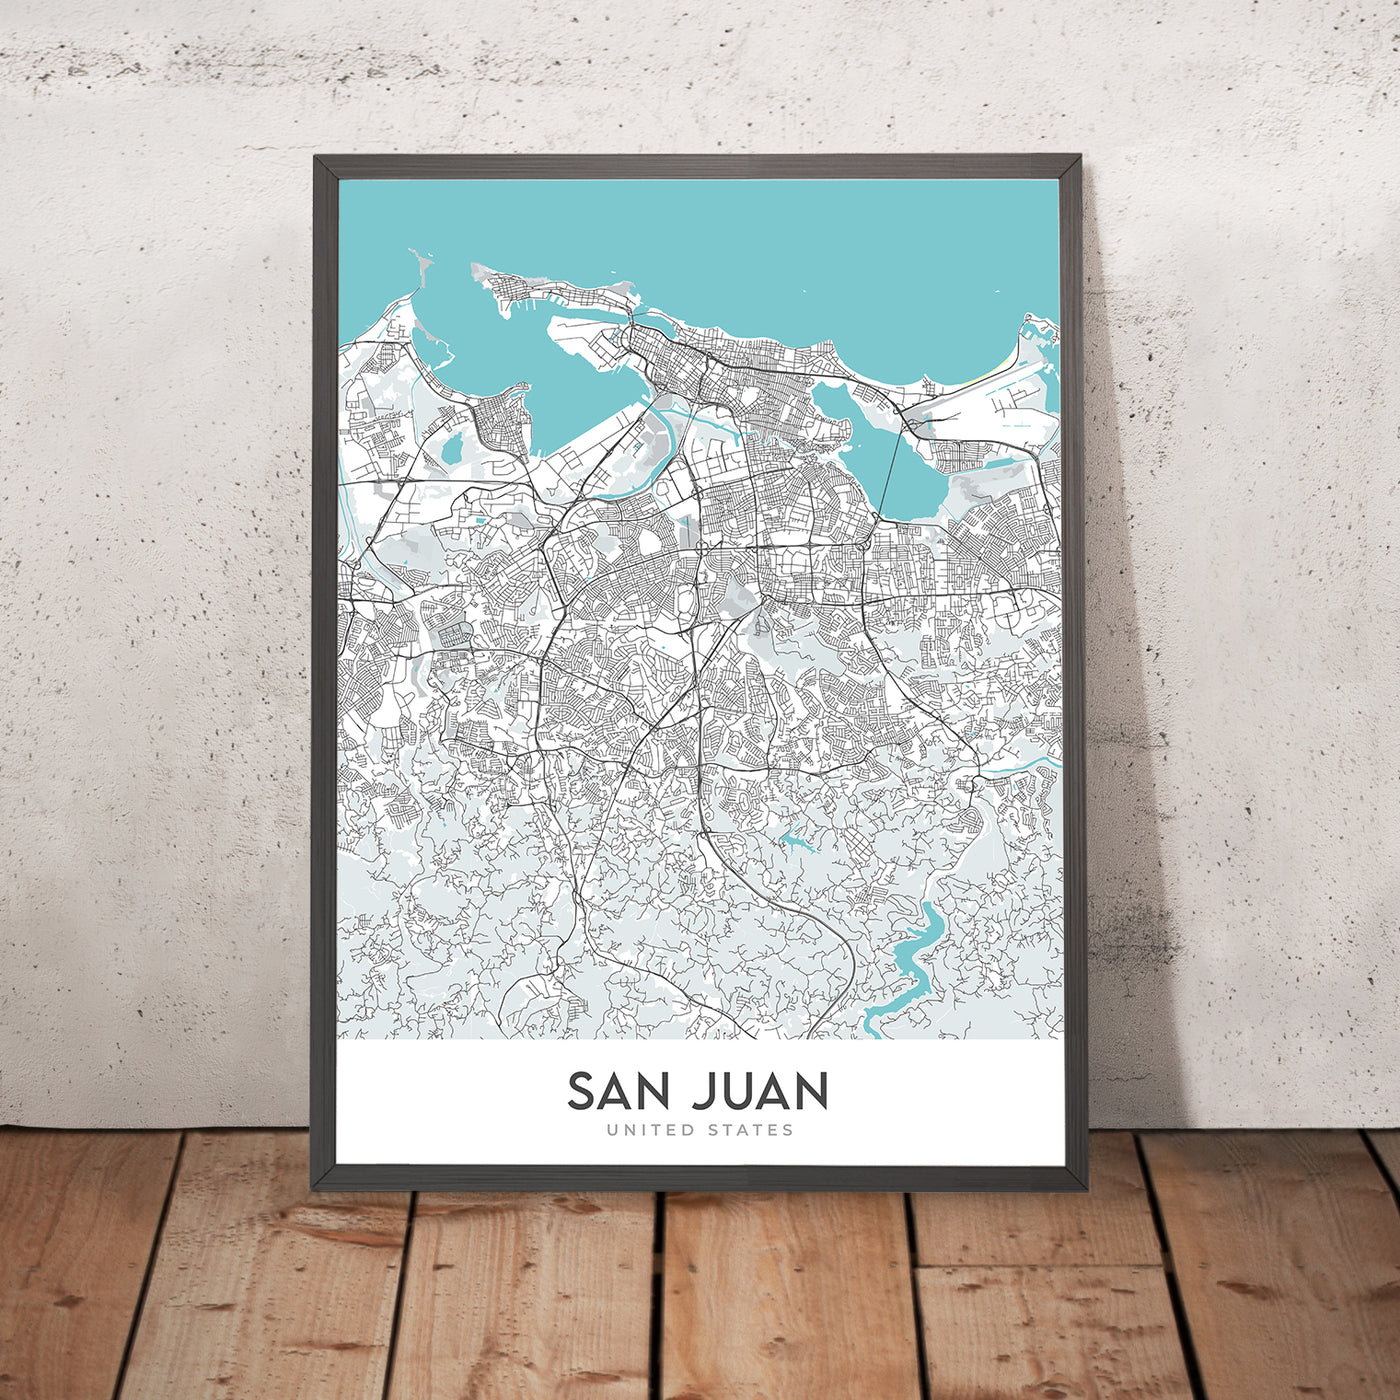 Plan de la ville moderne de San Juan, Porto Rico : Condado, vieux San Juan, El Yunque, Castillo San Felipe del Morro, Castillo San Cristóbal